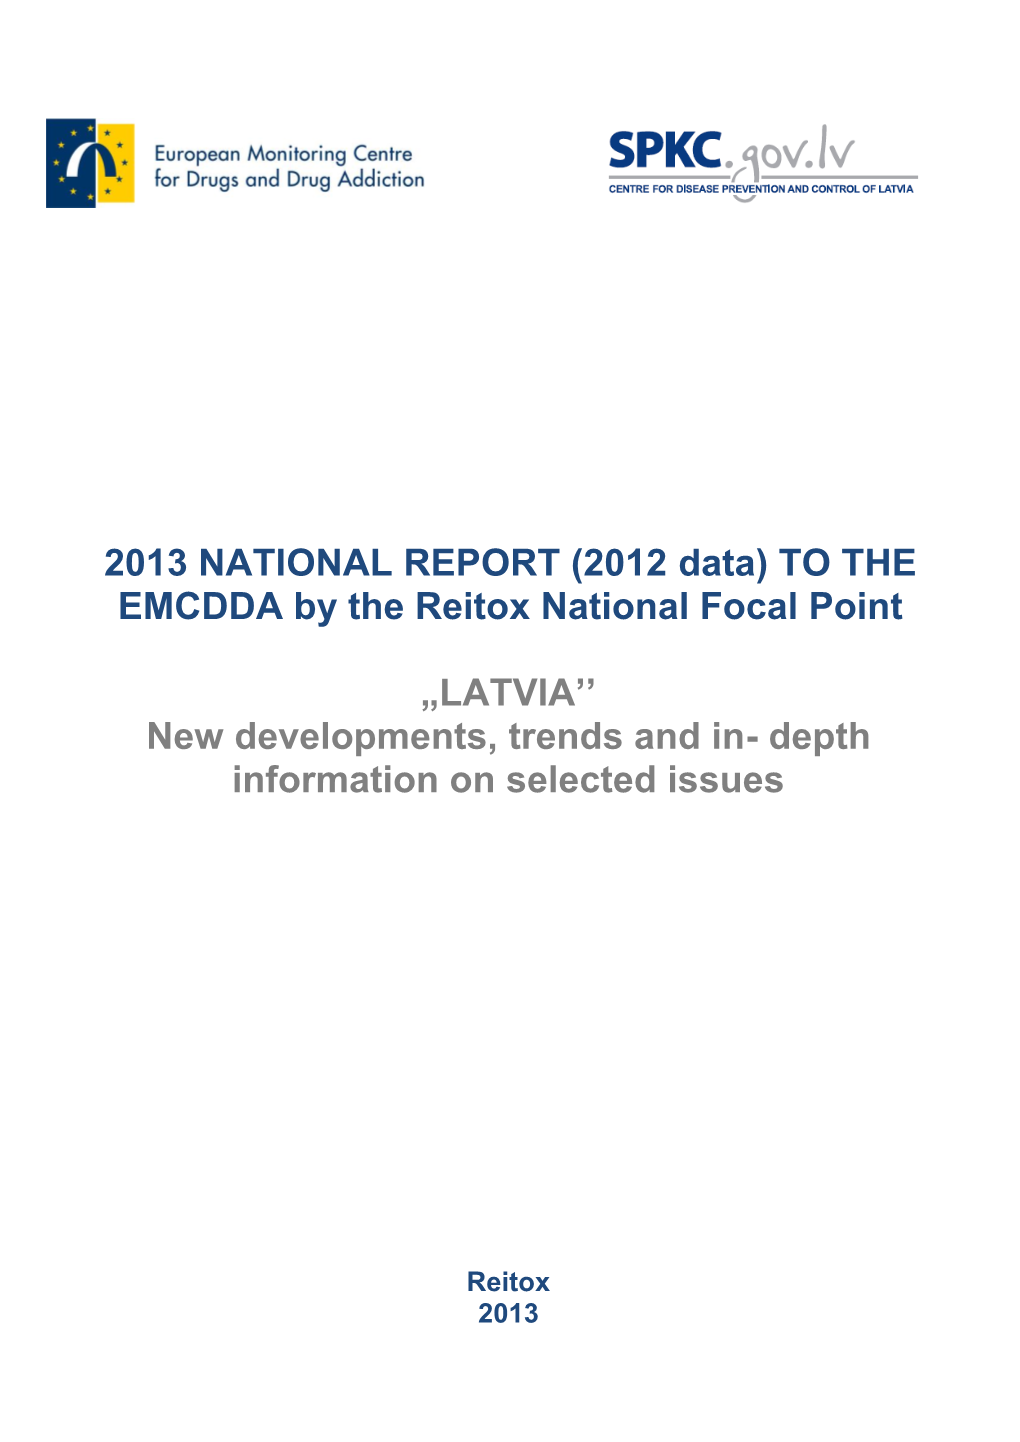 2009 NATIONAL REPORT (2008 Data) Latvia